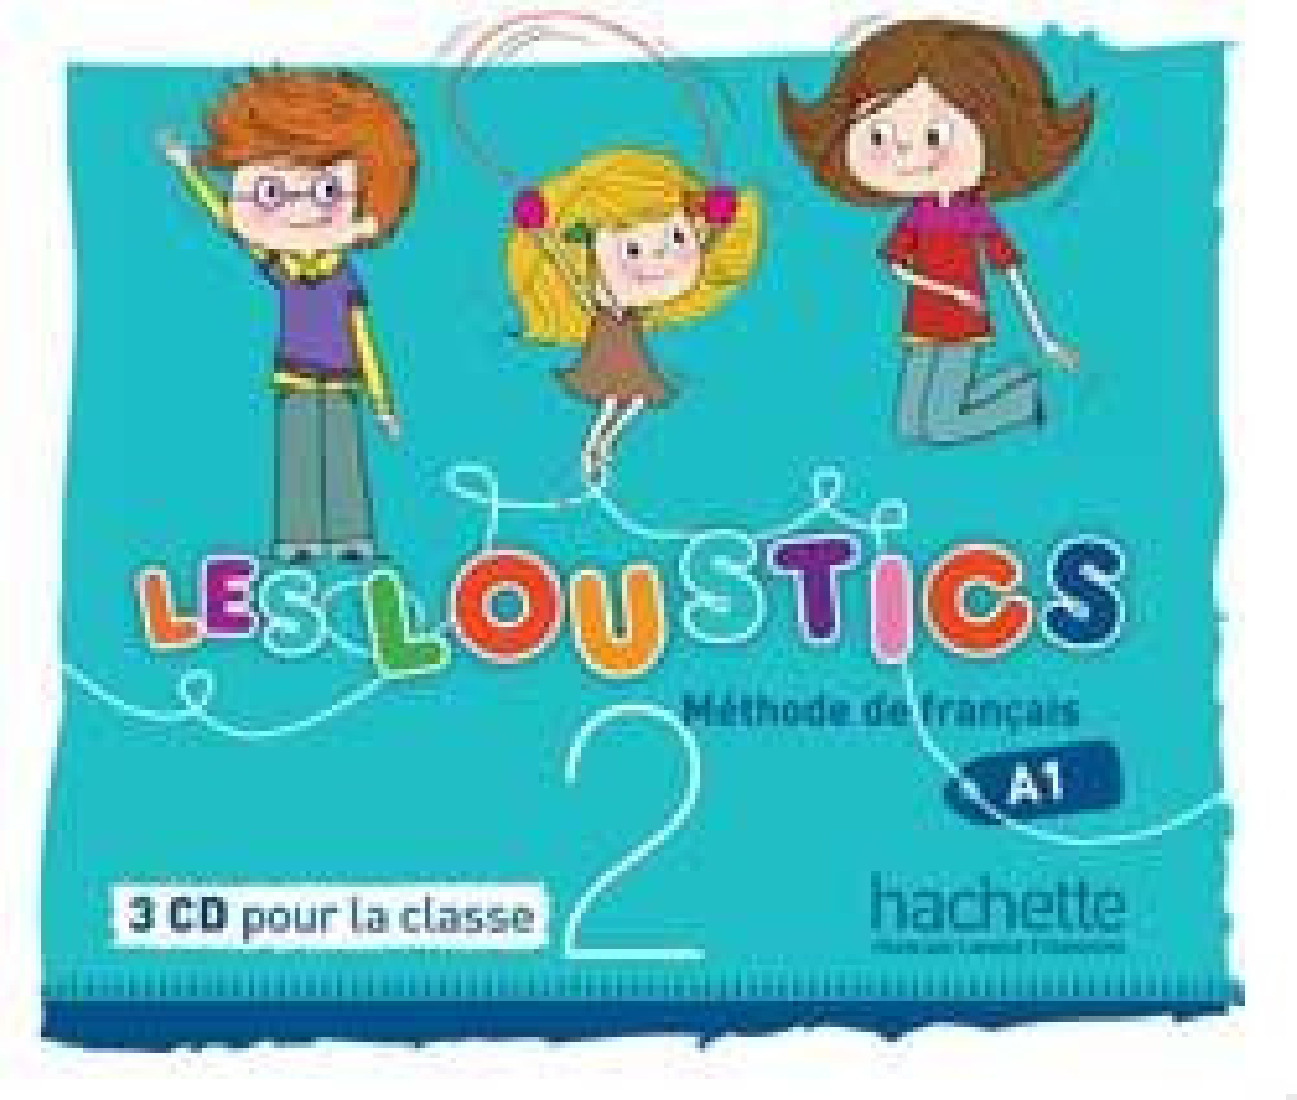 LES LOUSTICS 2 A1 CD AUDIO CLASS (3)